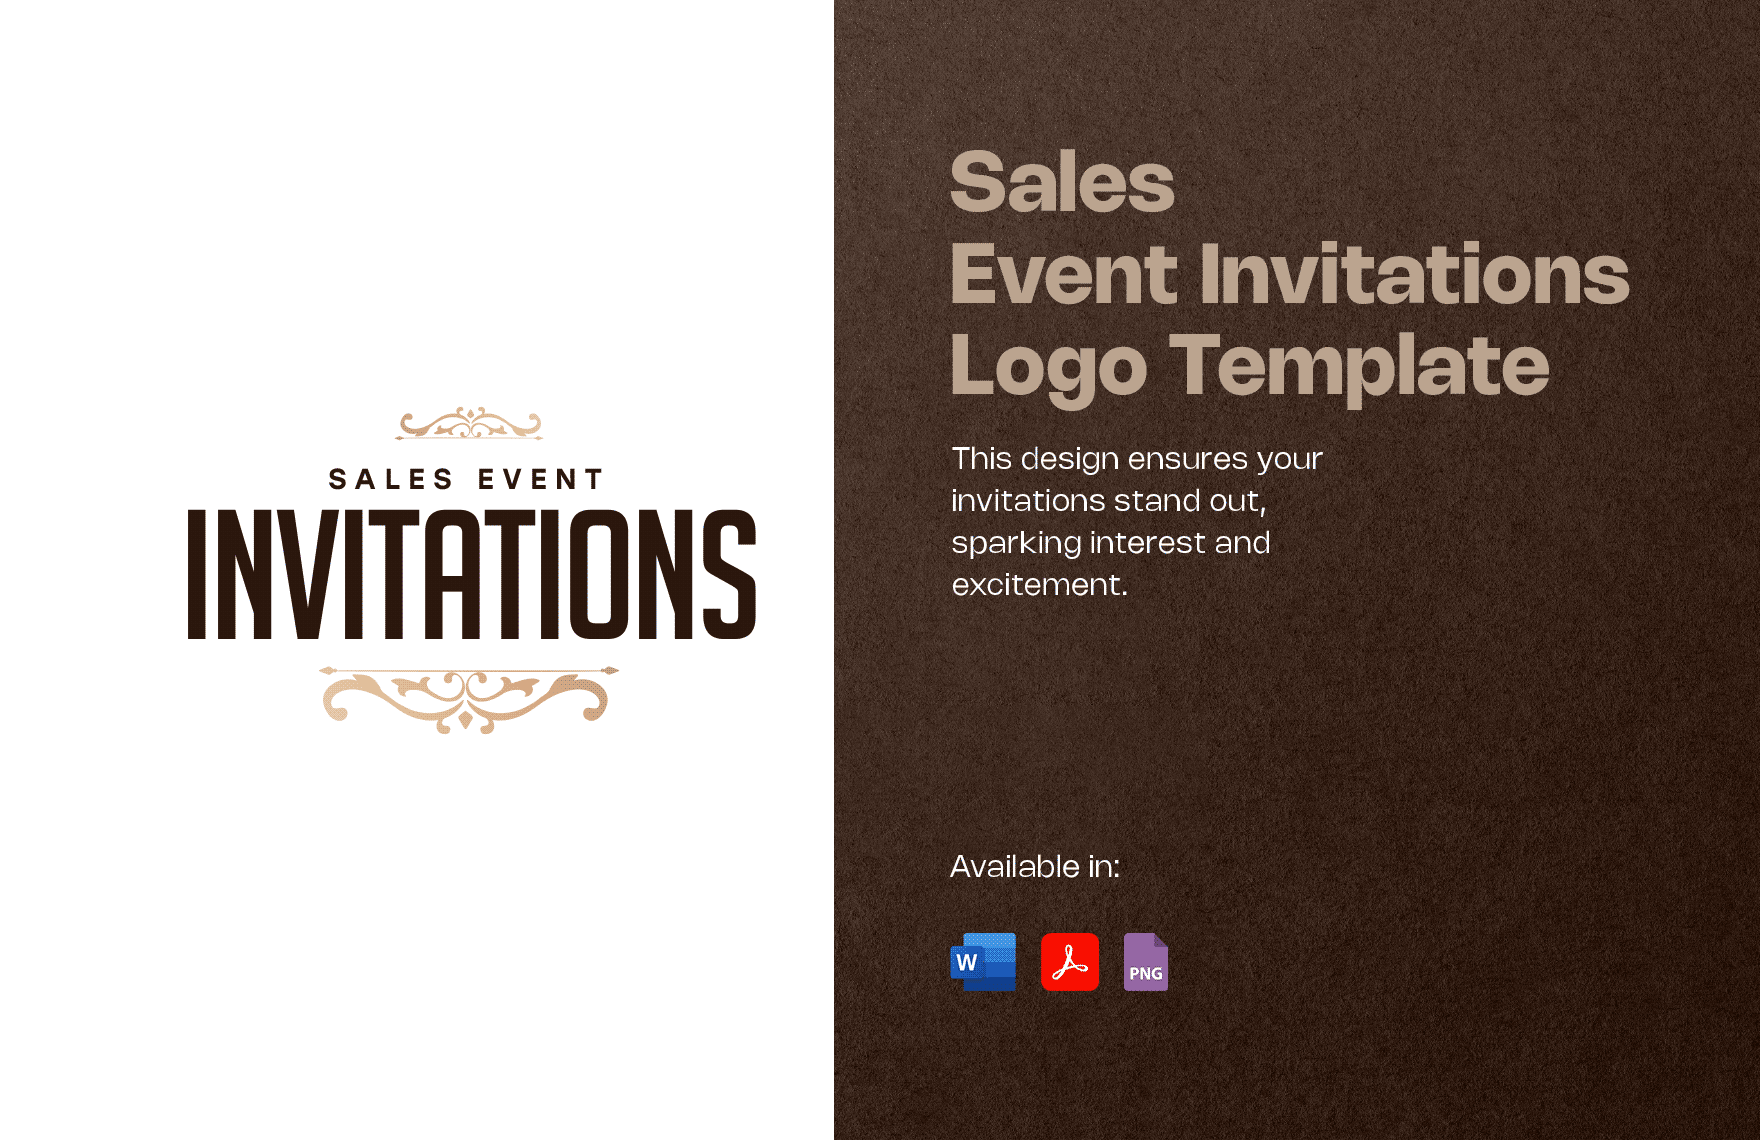 Sales Event Invitations Logo Template